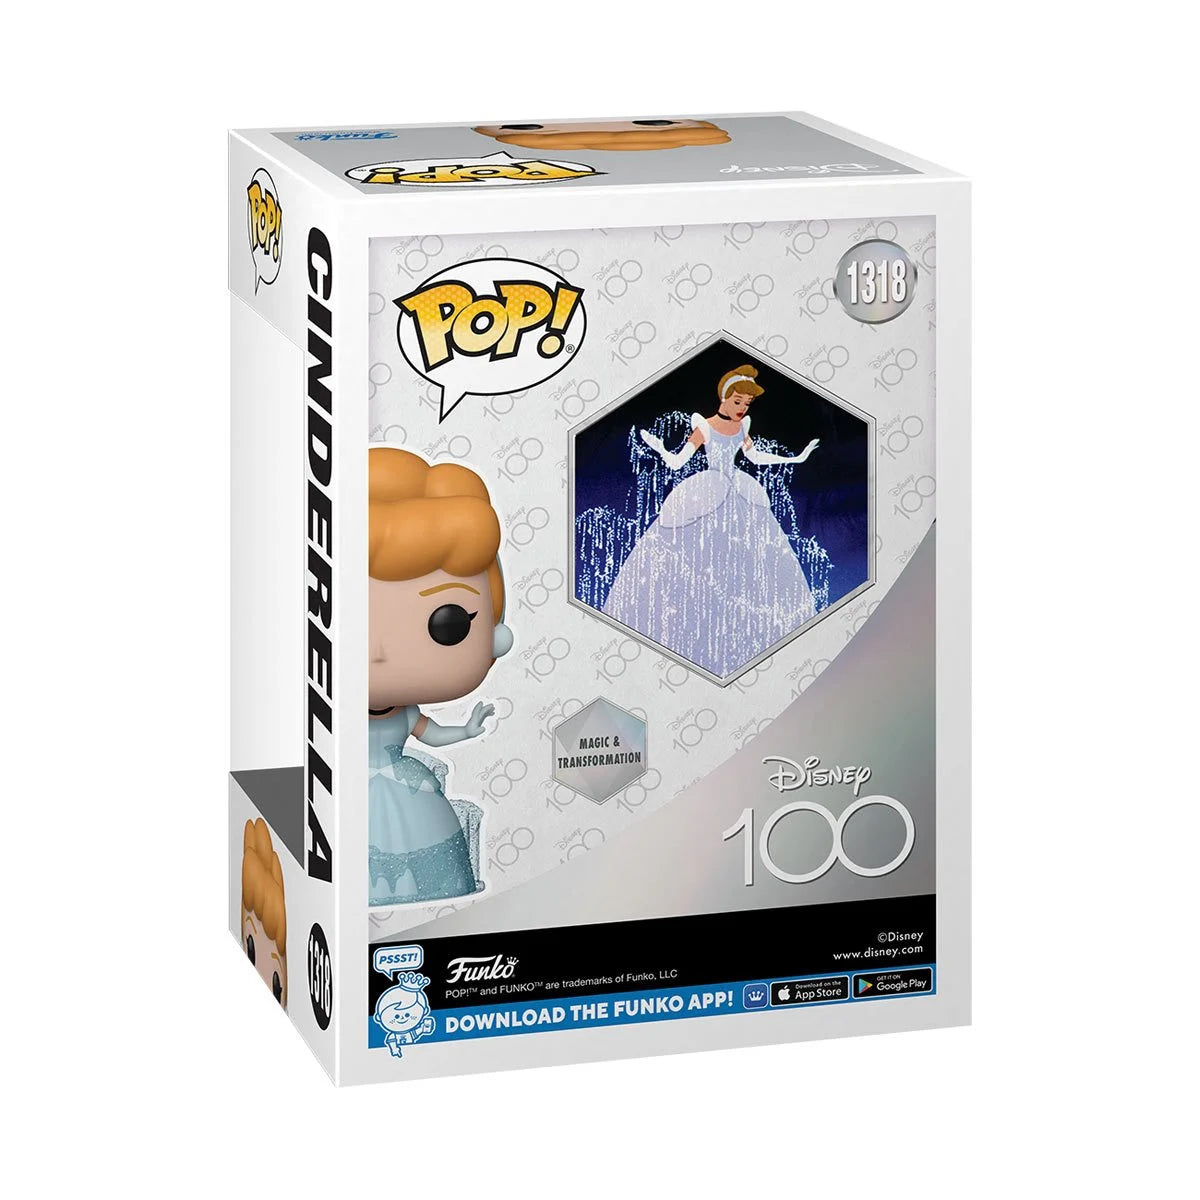 Cinderella Disney 100 Funko Pop! Vinyl Figure